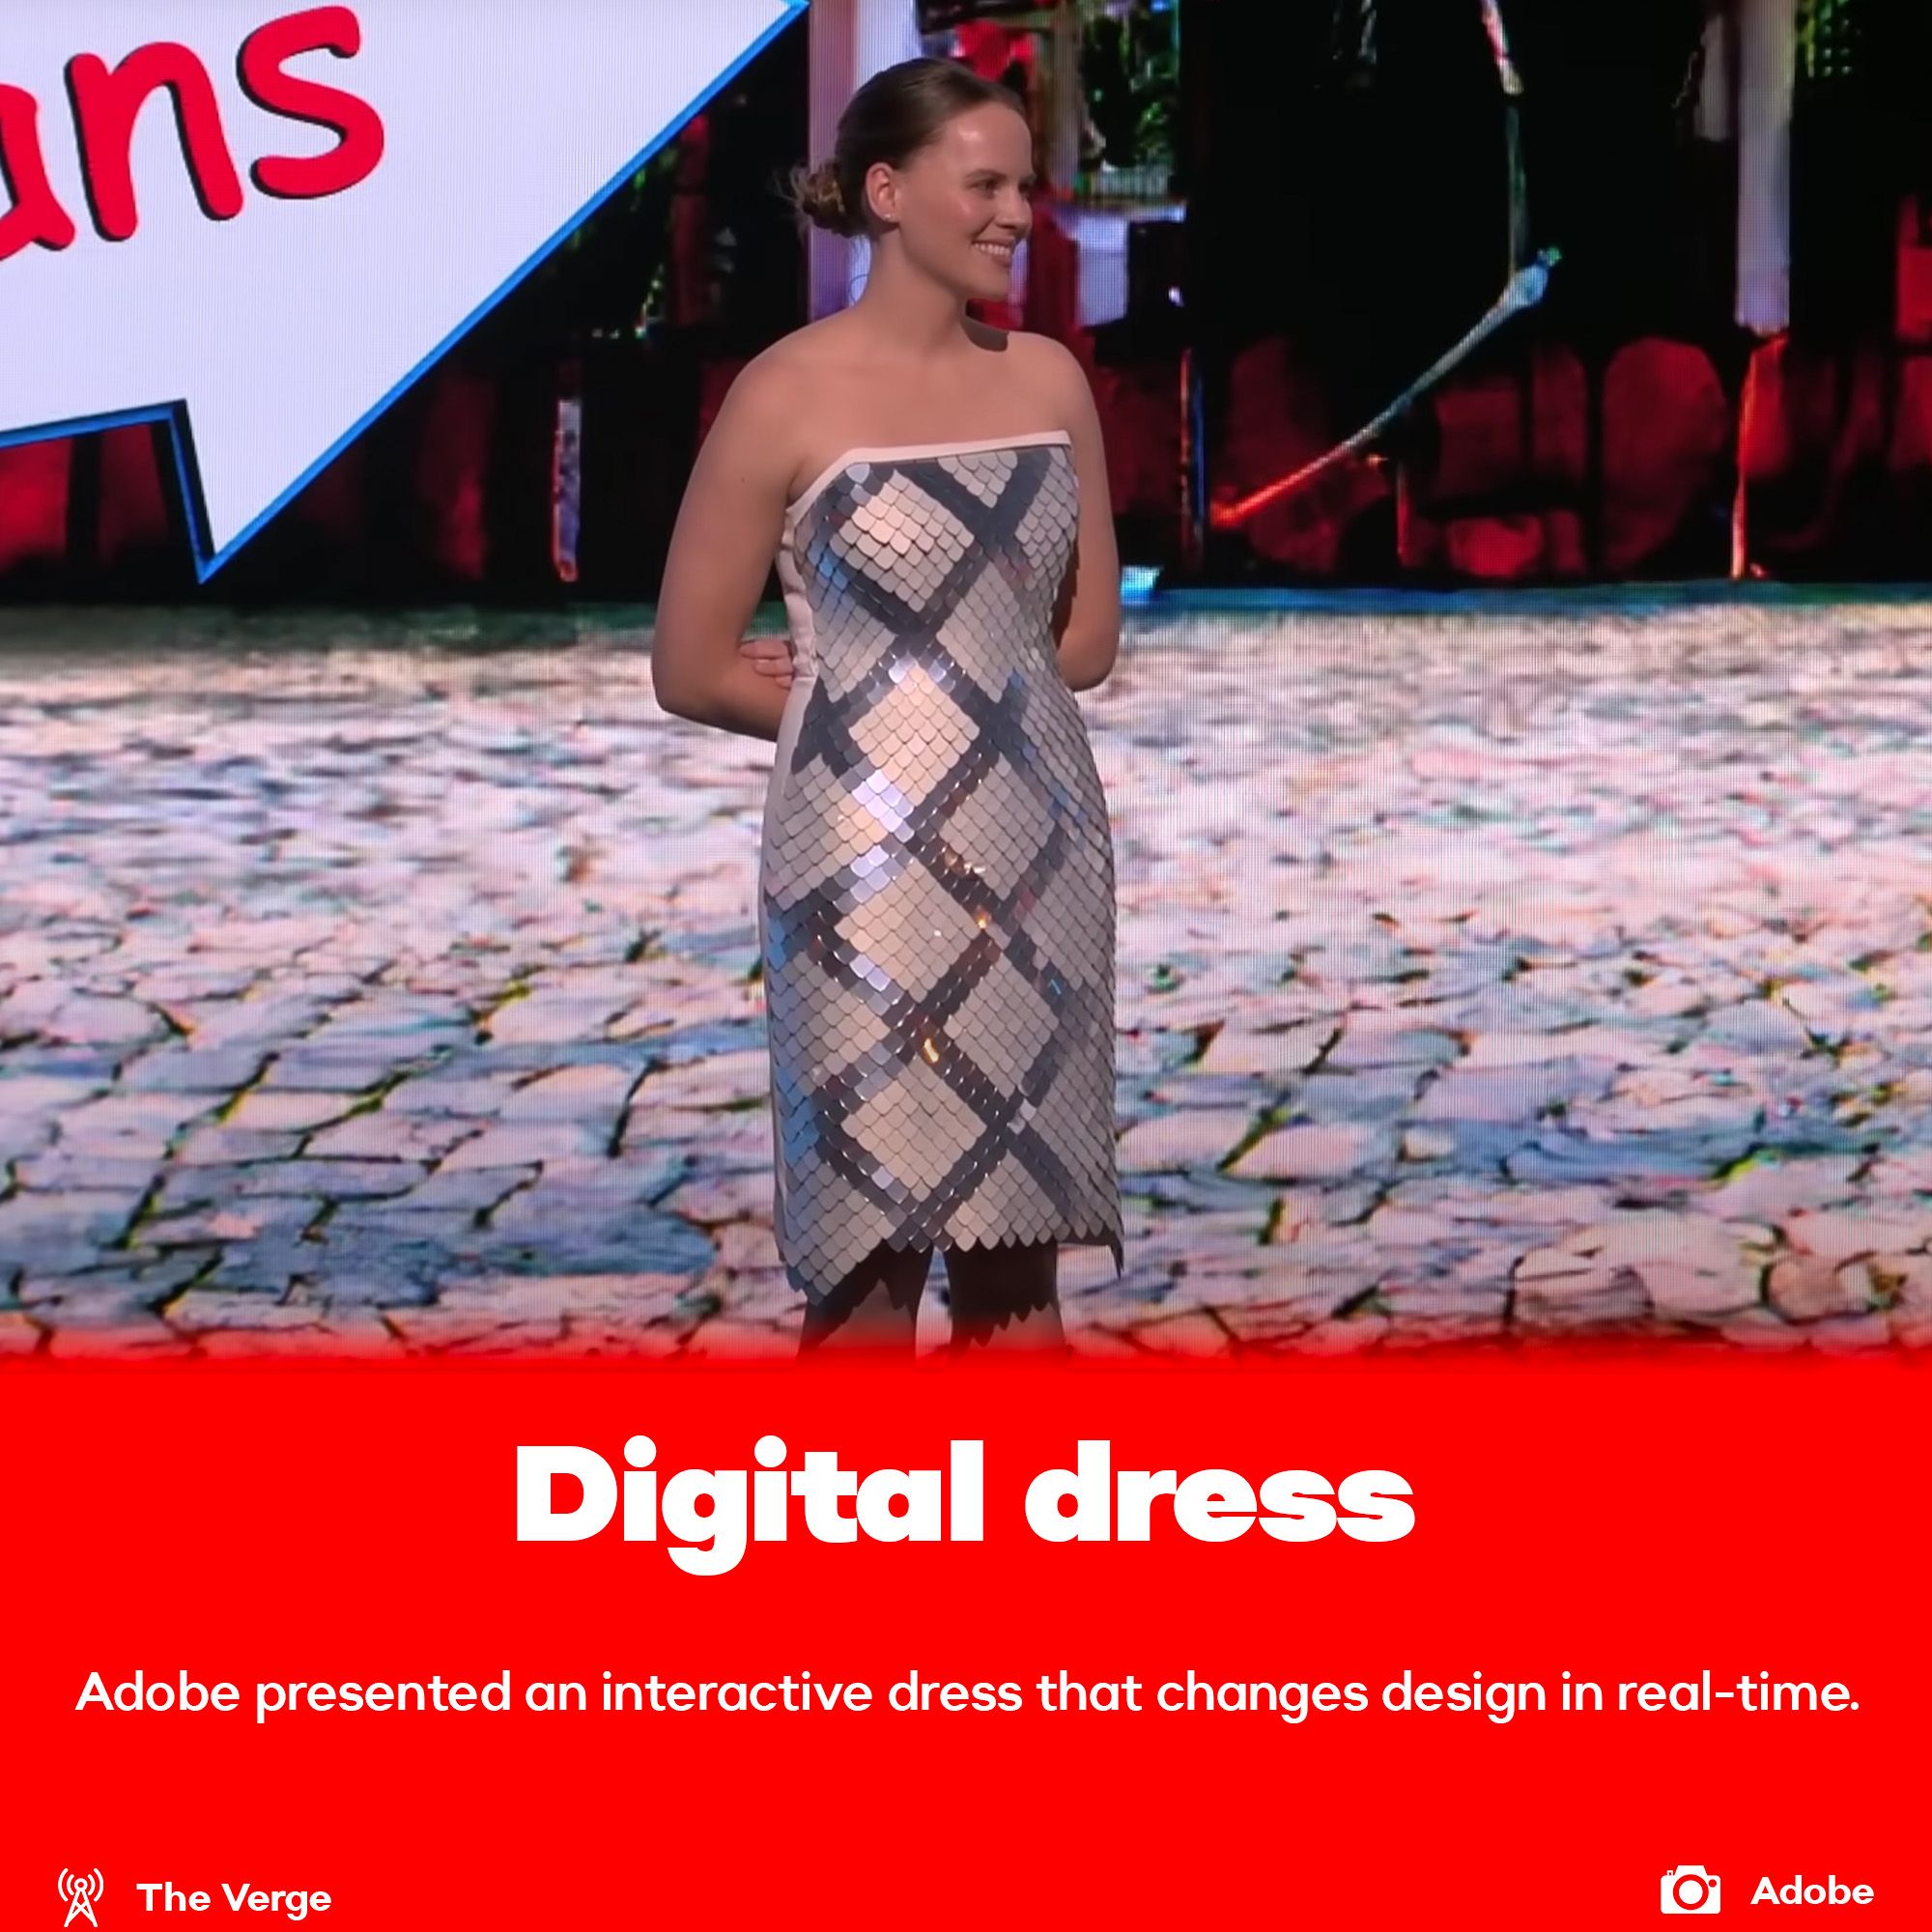 Adobe's digital dress